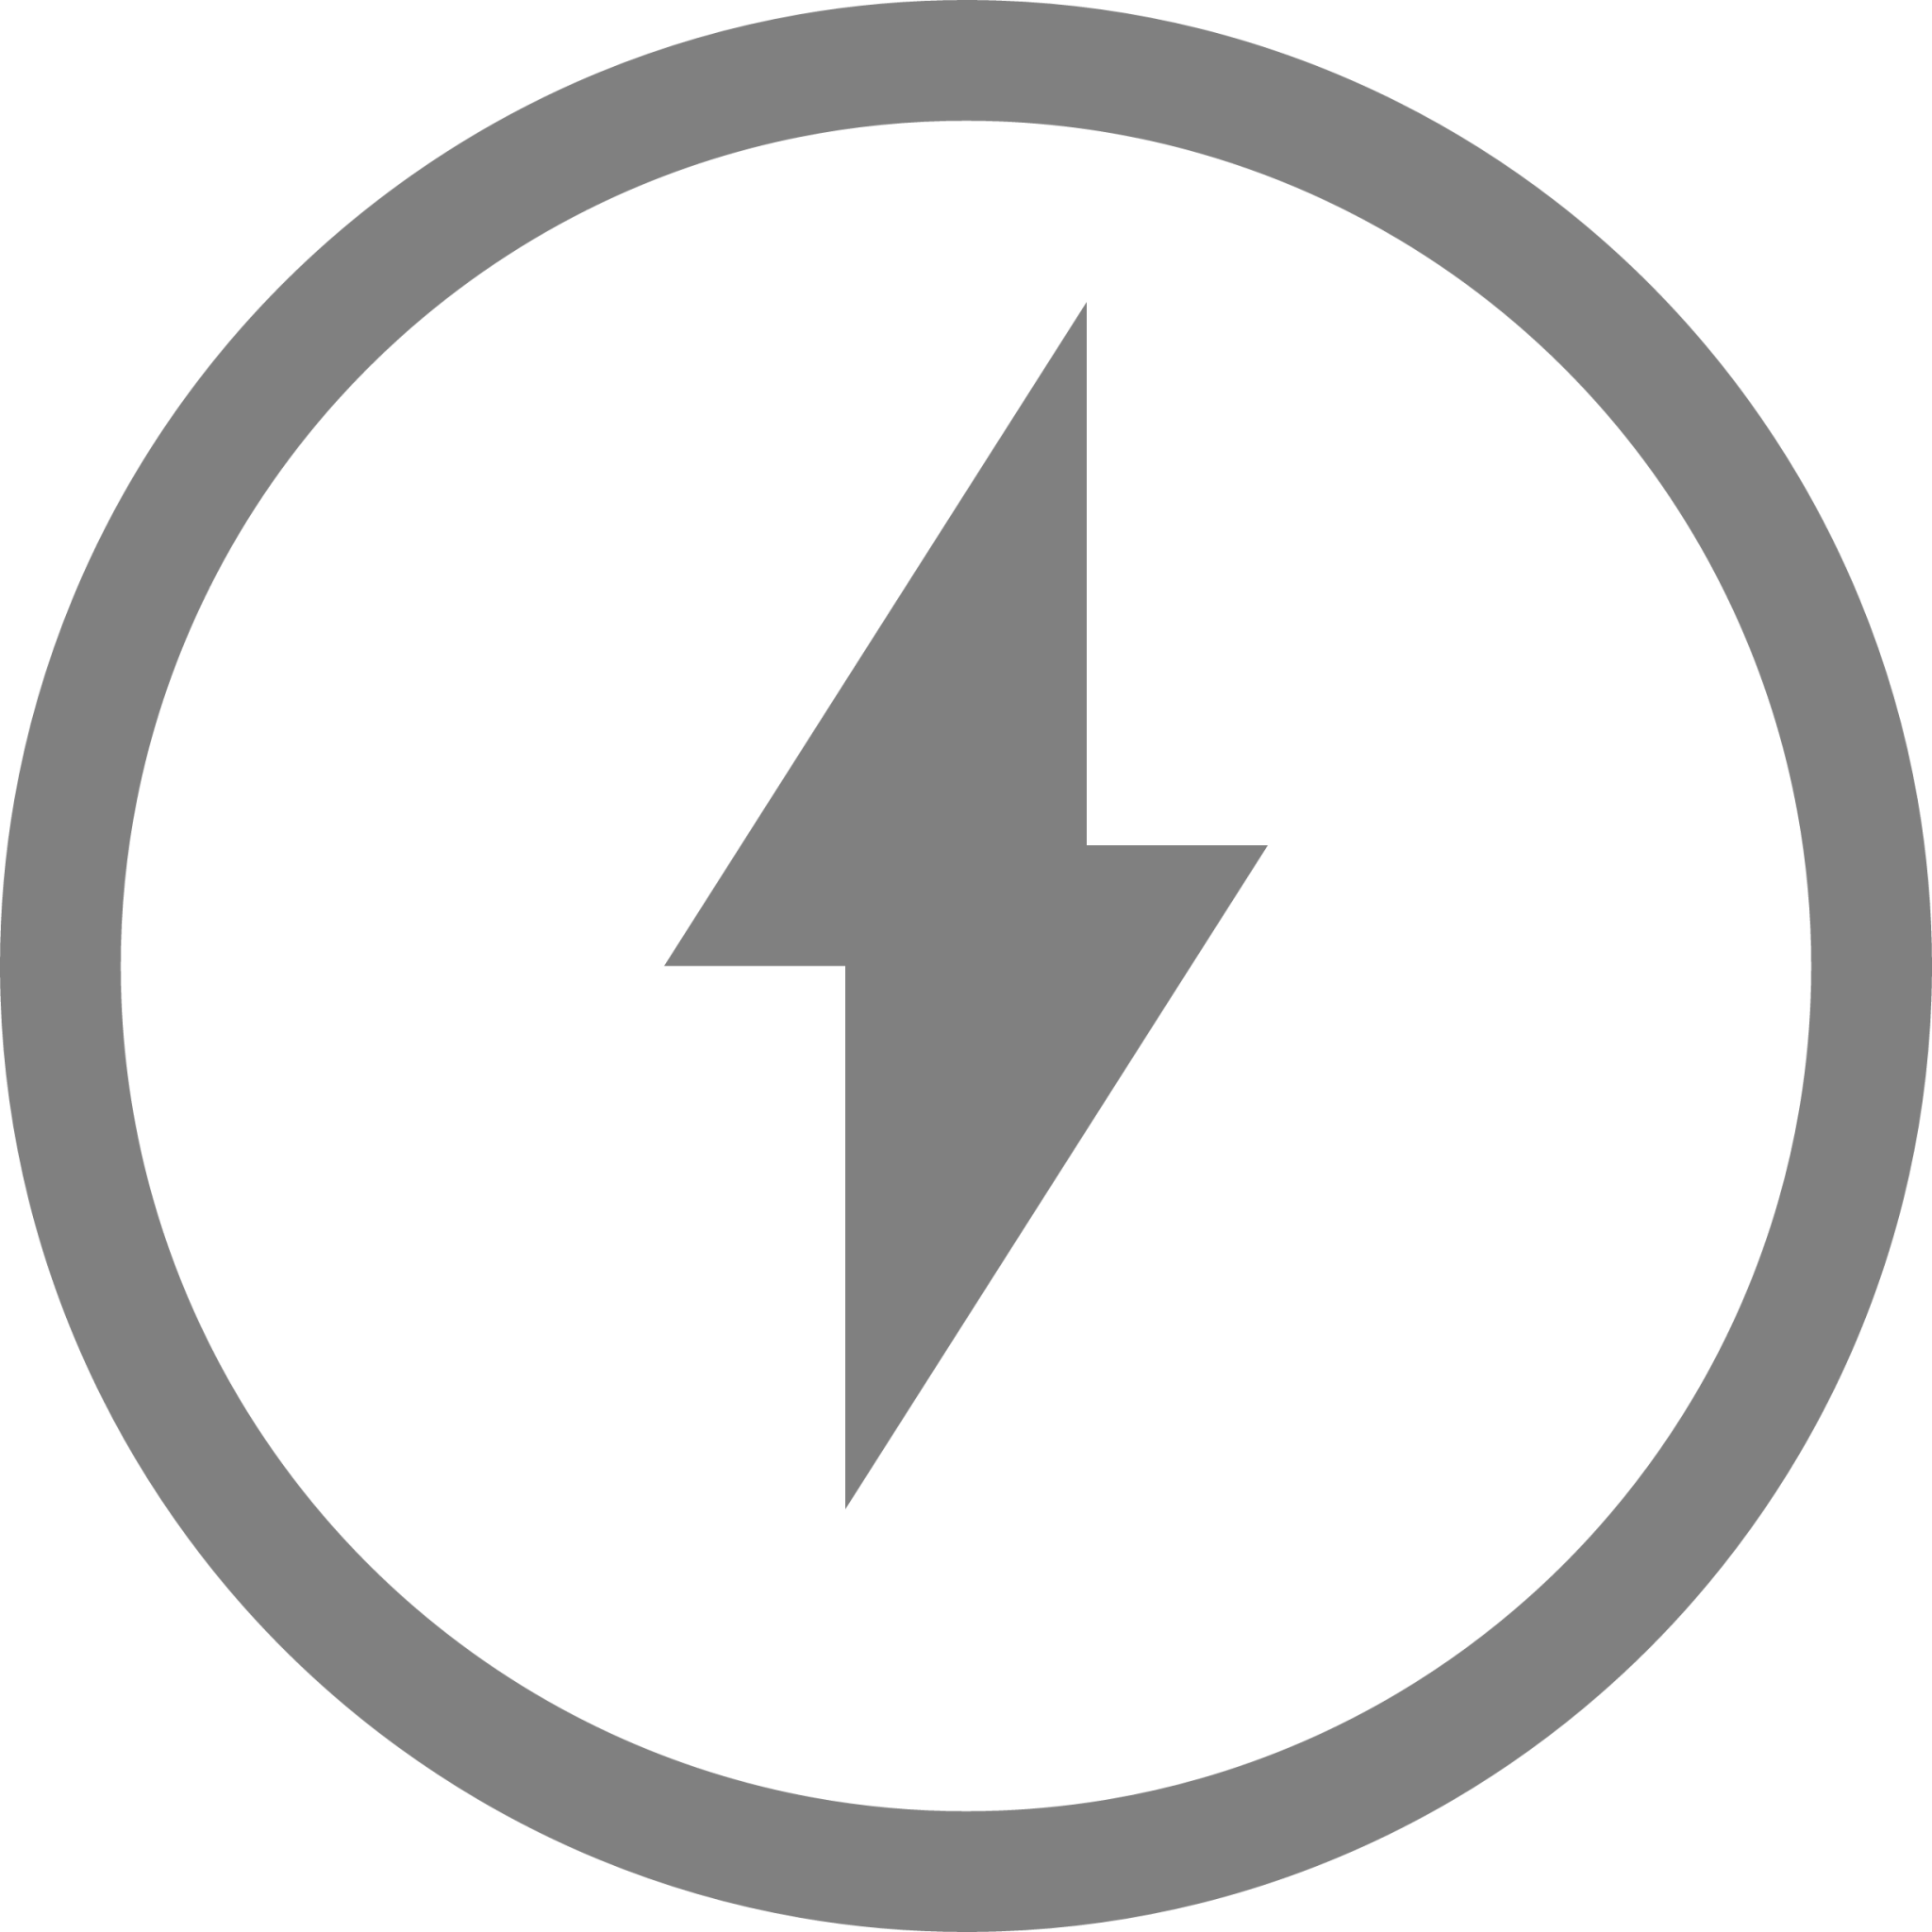 preferences system power symbolic icon